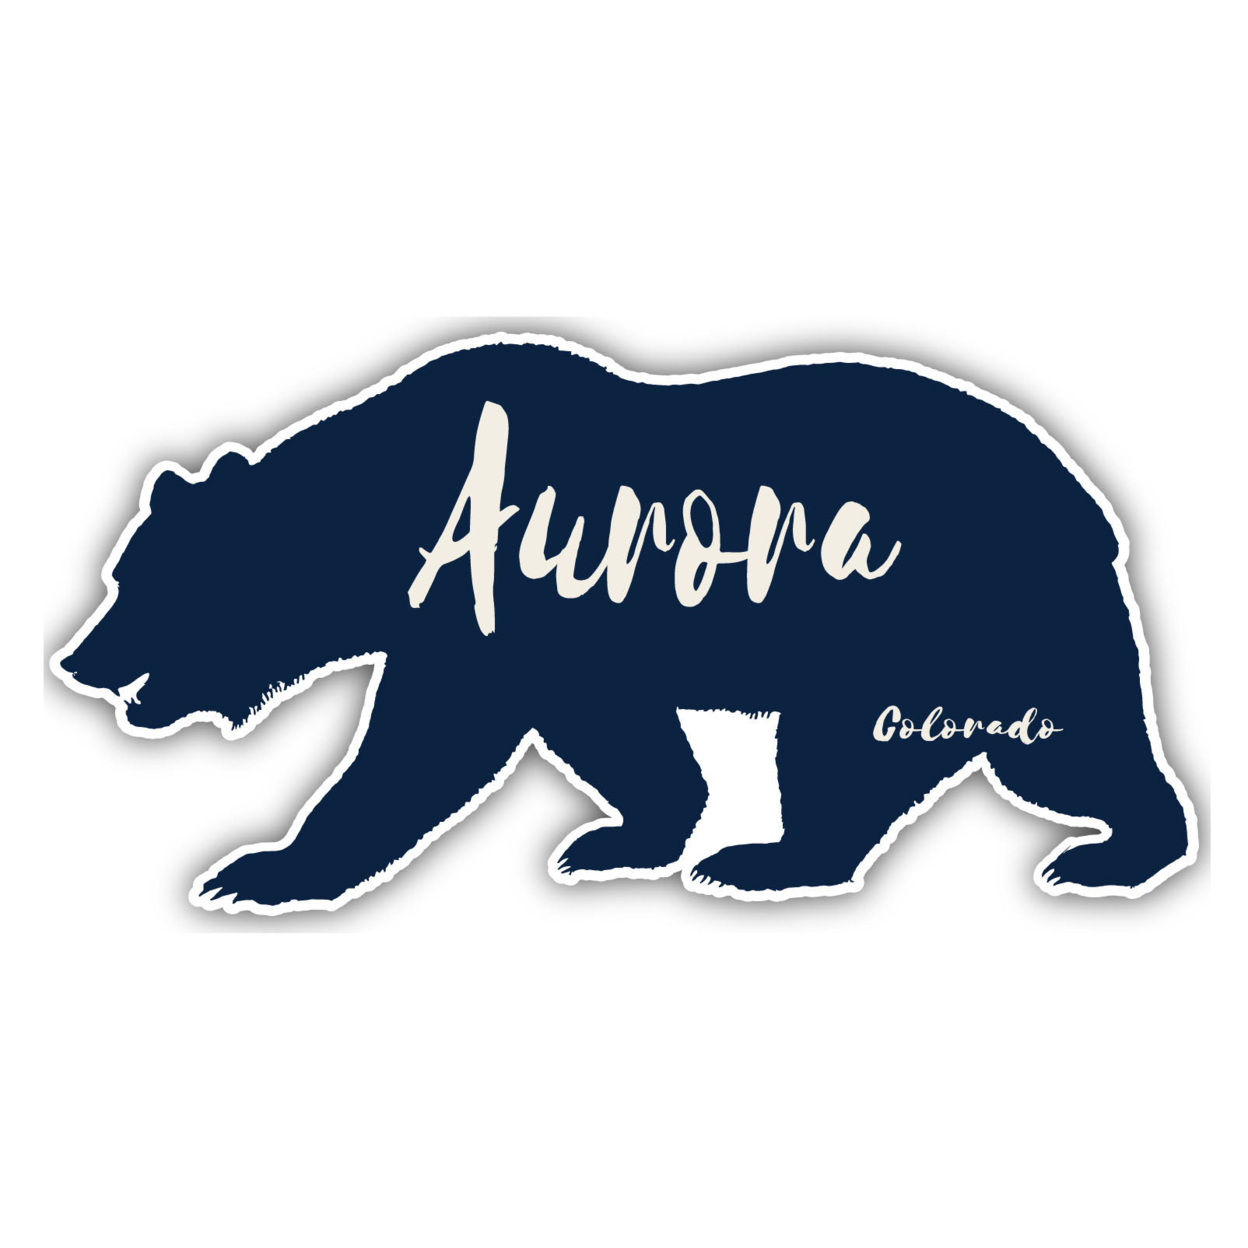 Aurora Colorado Souvenir Decorative Stickers (Choose Theme And Size) - 4-Pack, 6-Inch, Bear